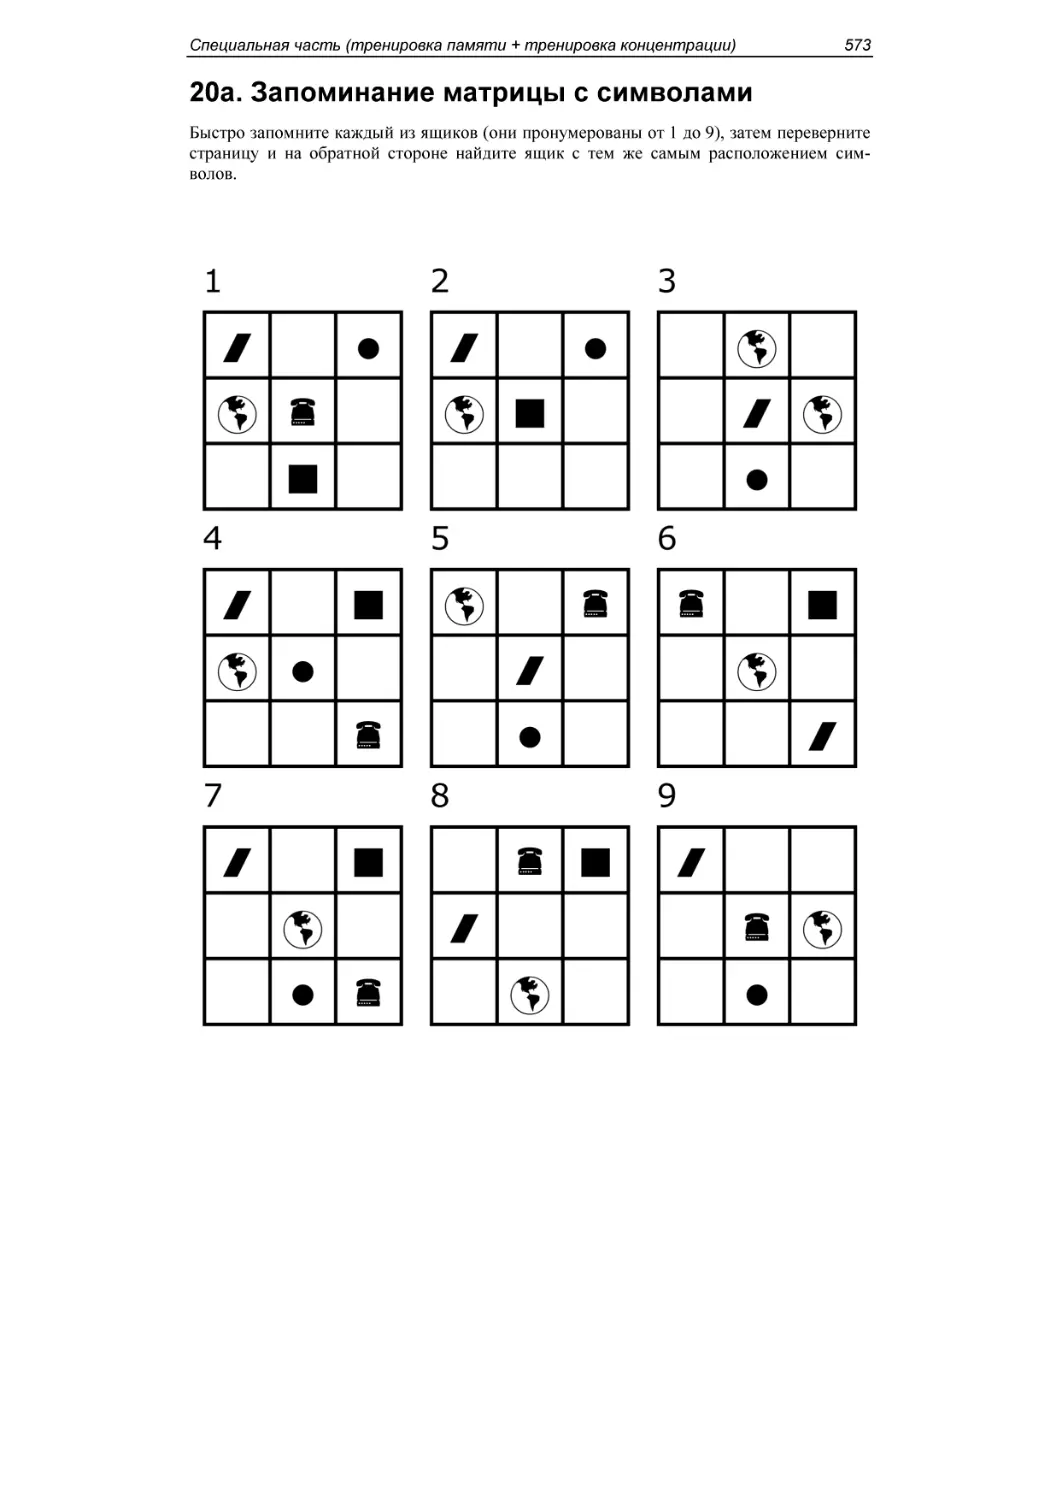 20a. Запоминание матрицы с символами